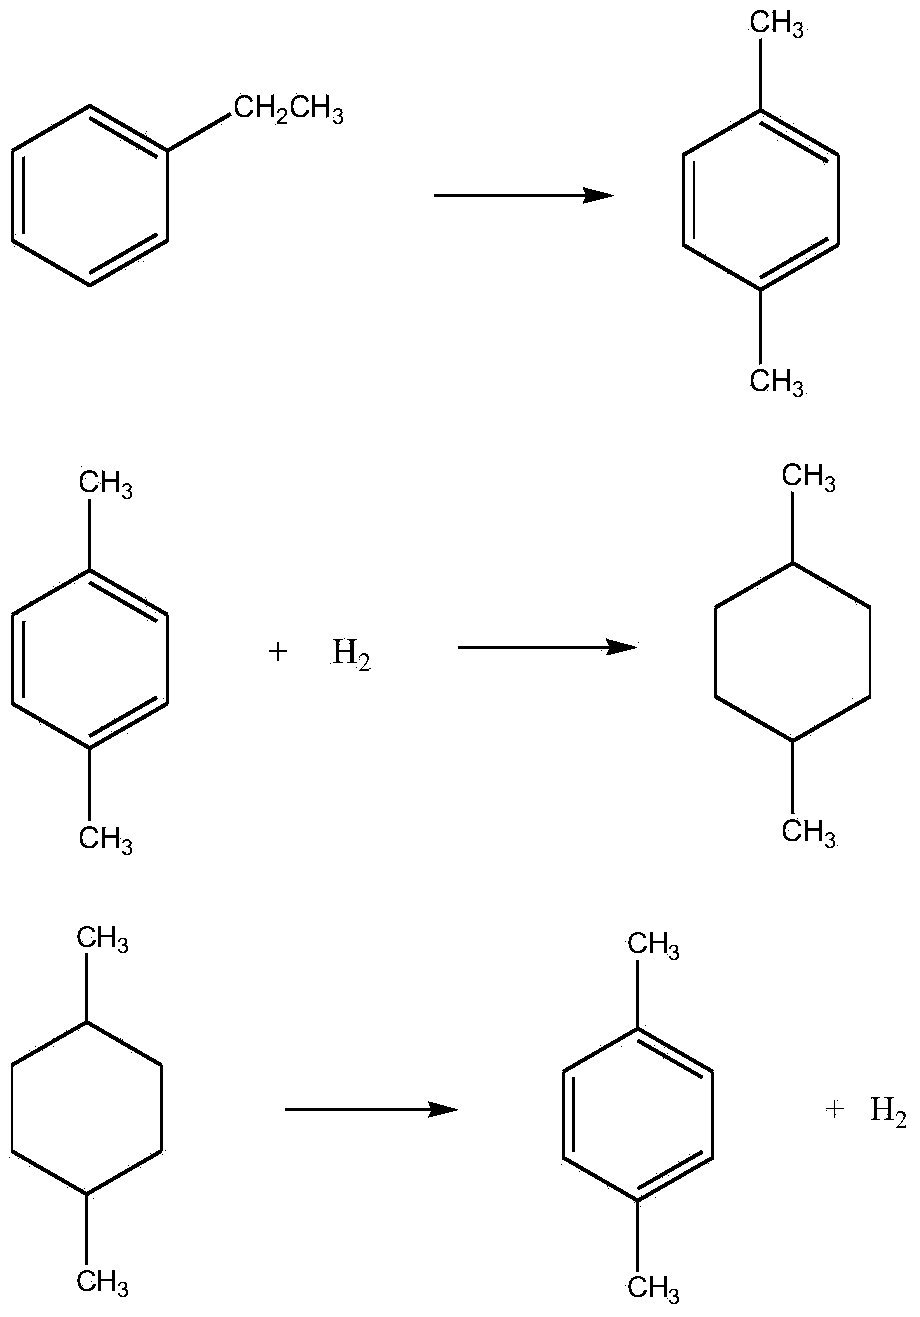 Separation method for producing paraxylene